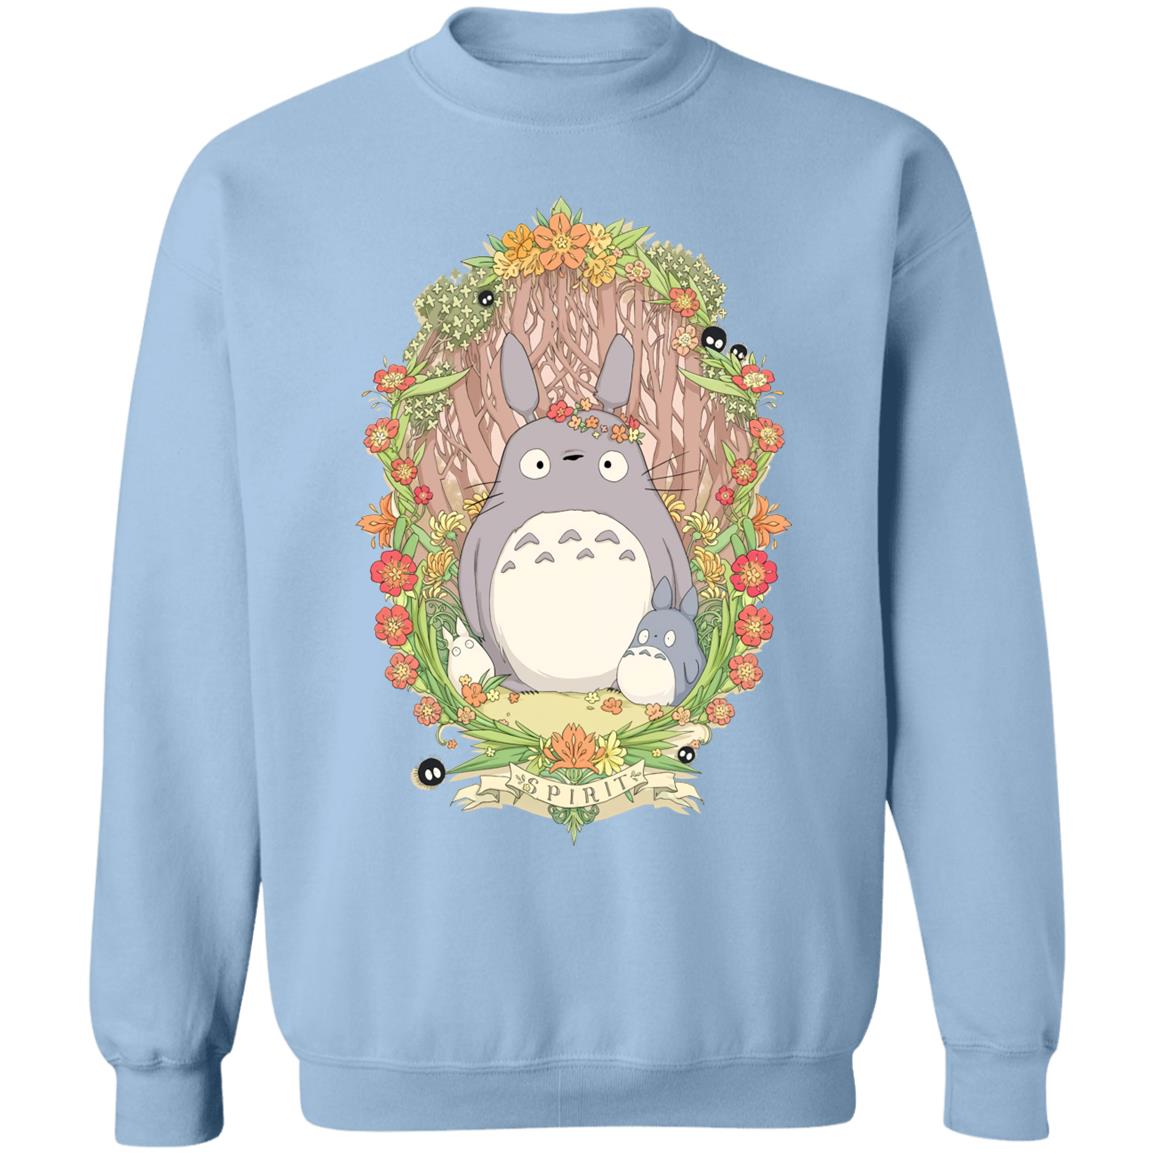 Totoro Family in Jungle Sweatshirt